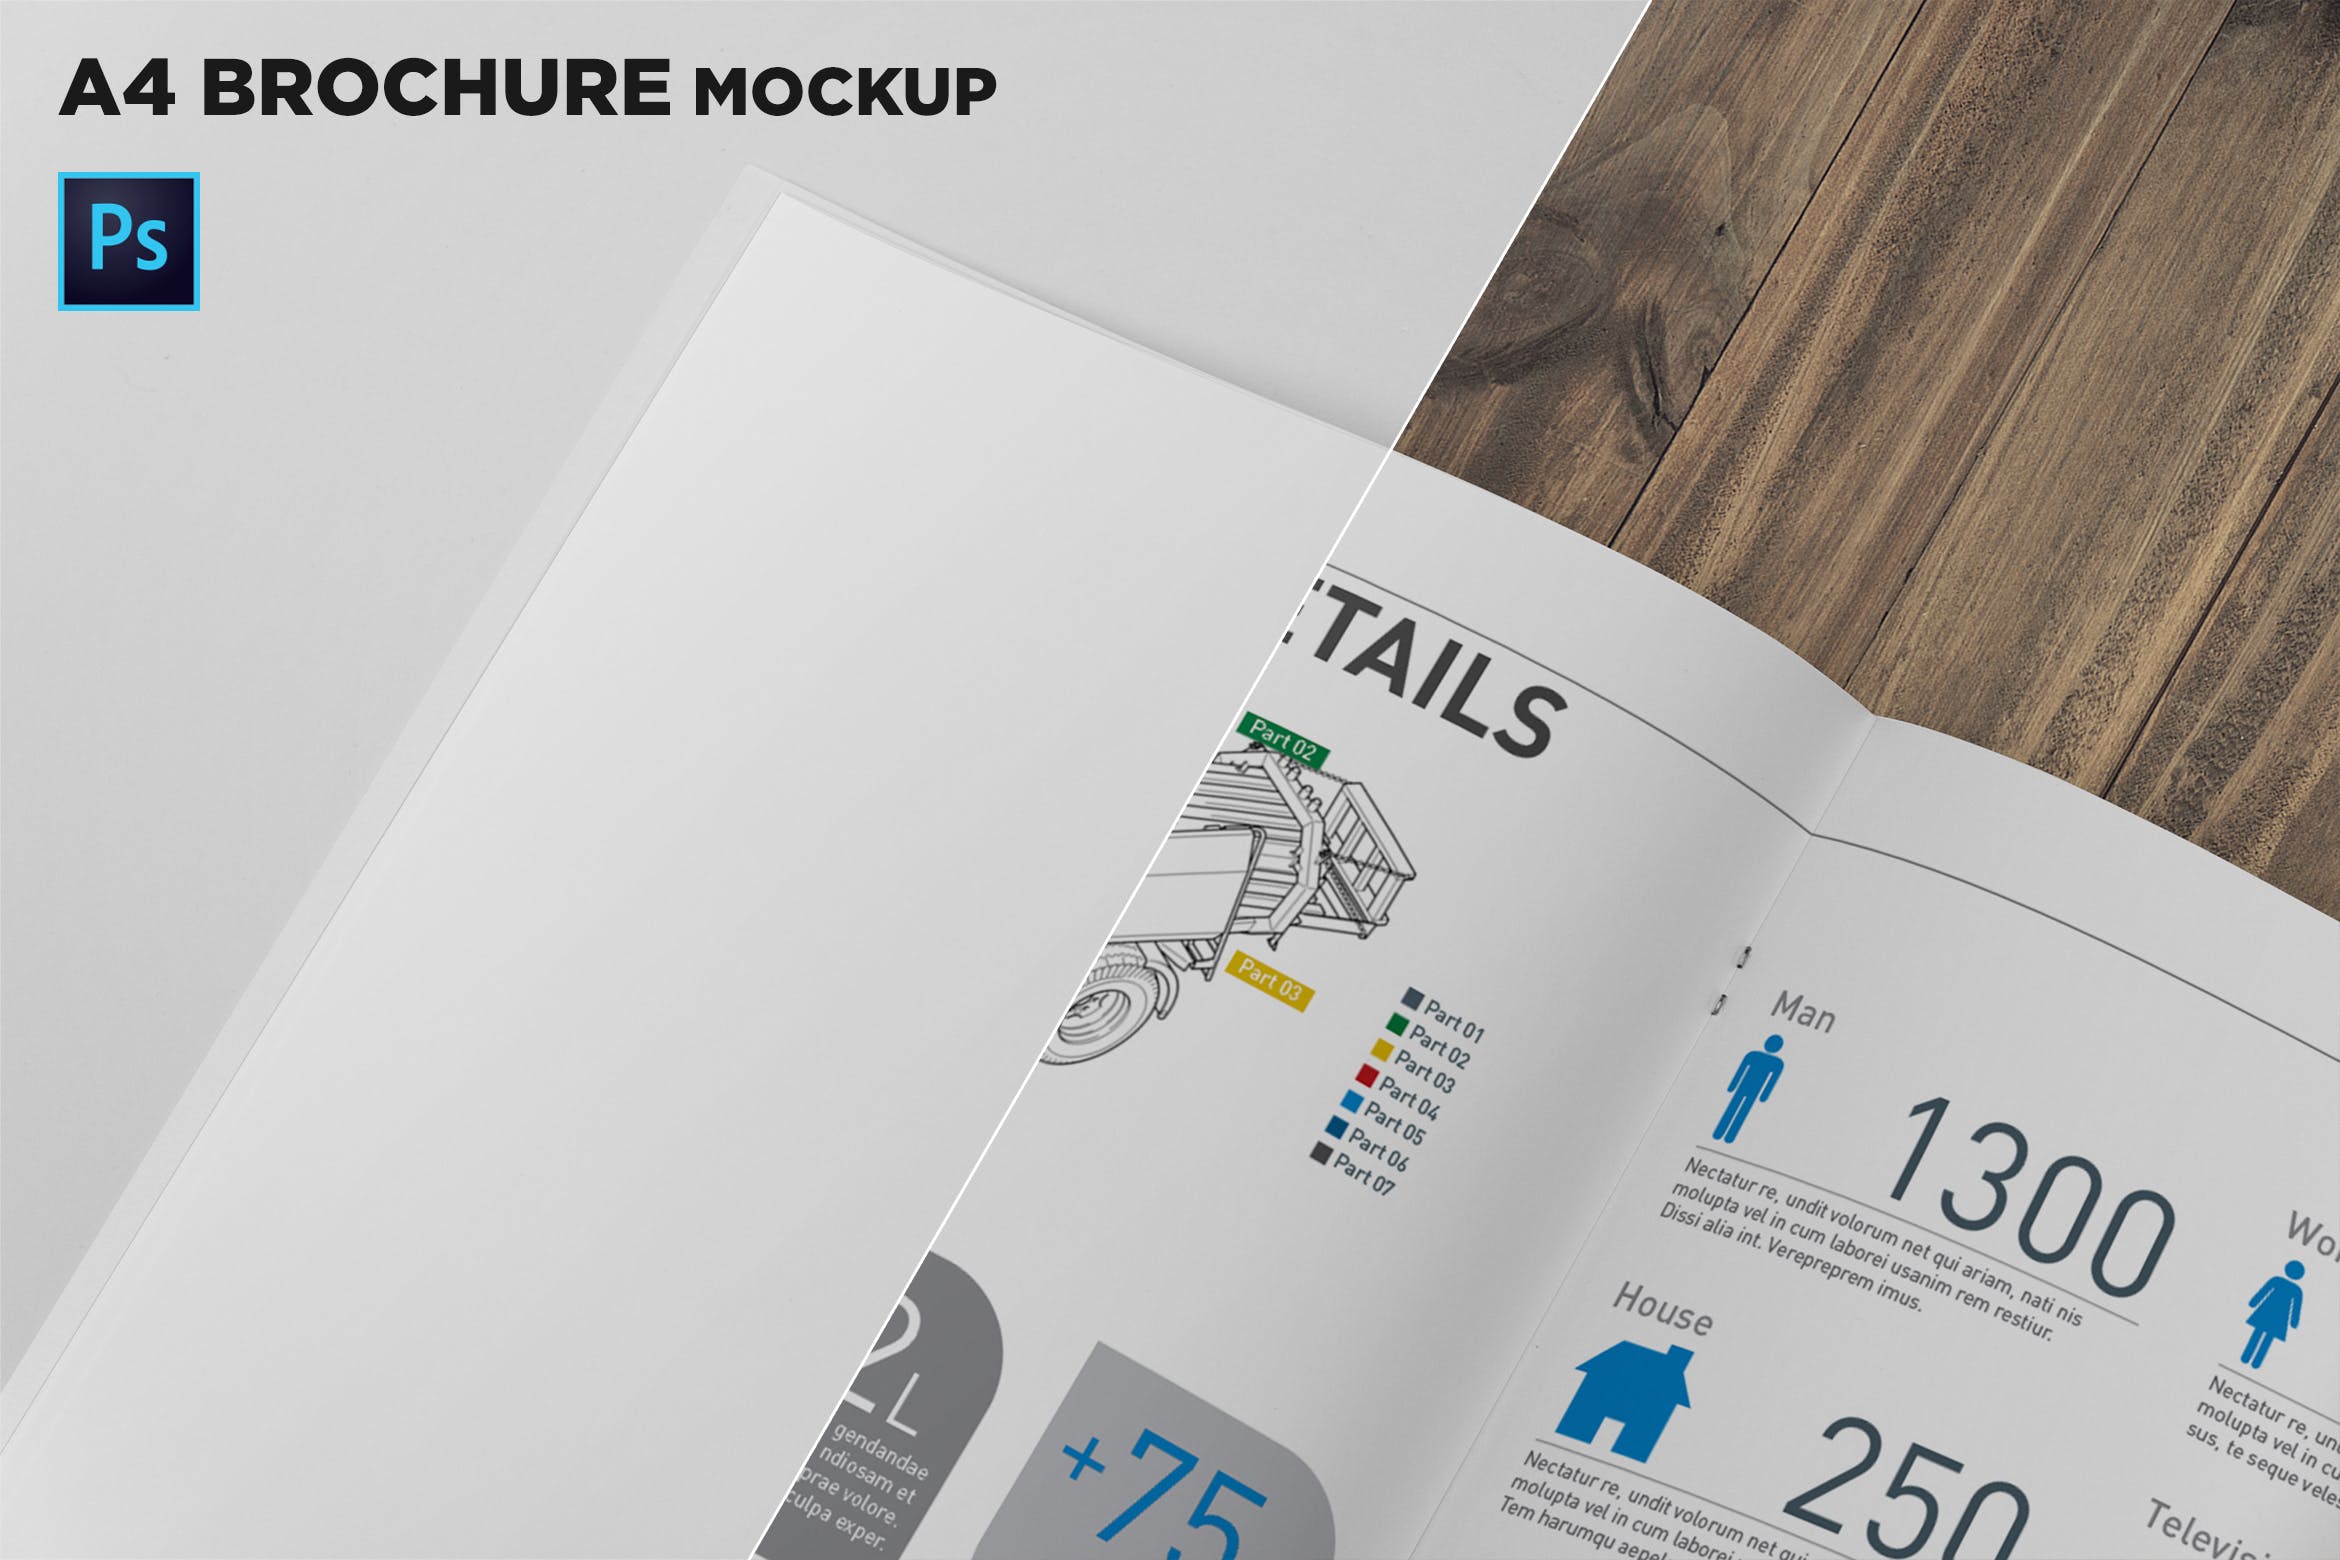 A4尺寸企业/品牌宣传册内页特写样机非凡图库精选模板 A4 Brochure Page Closeup Mockup插图